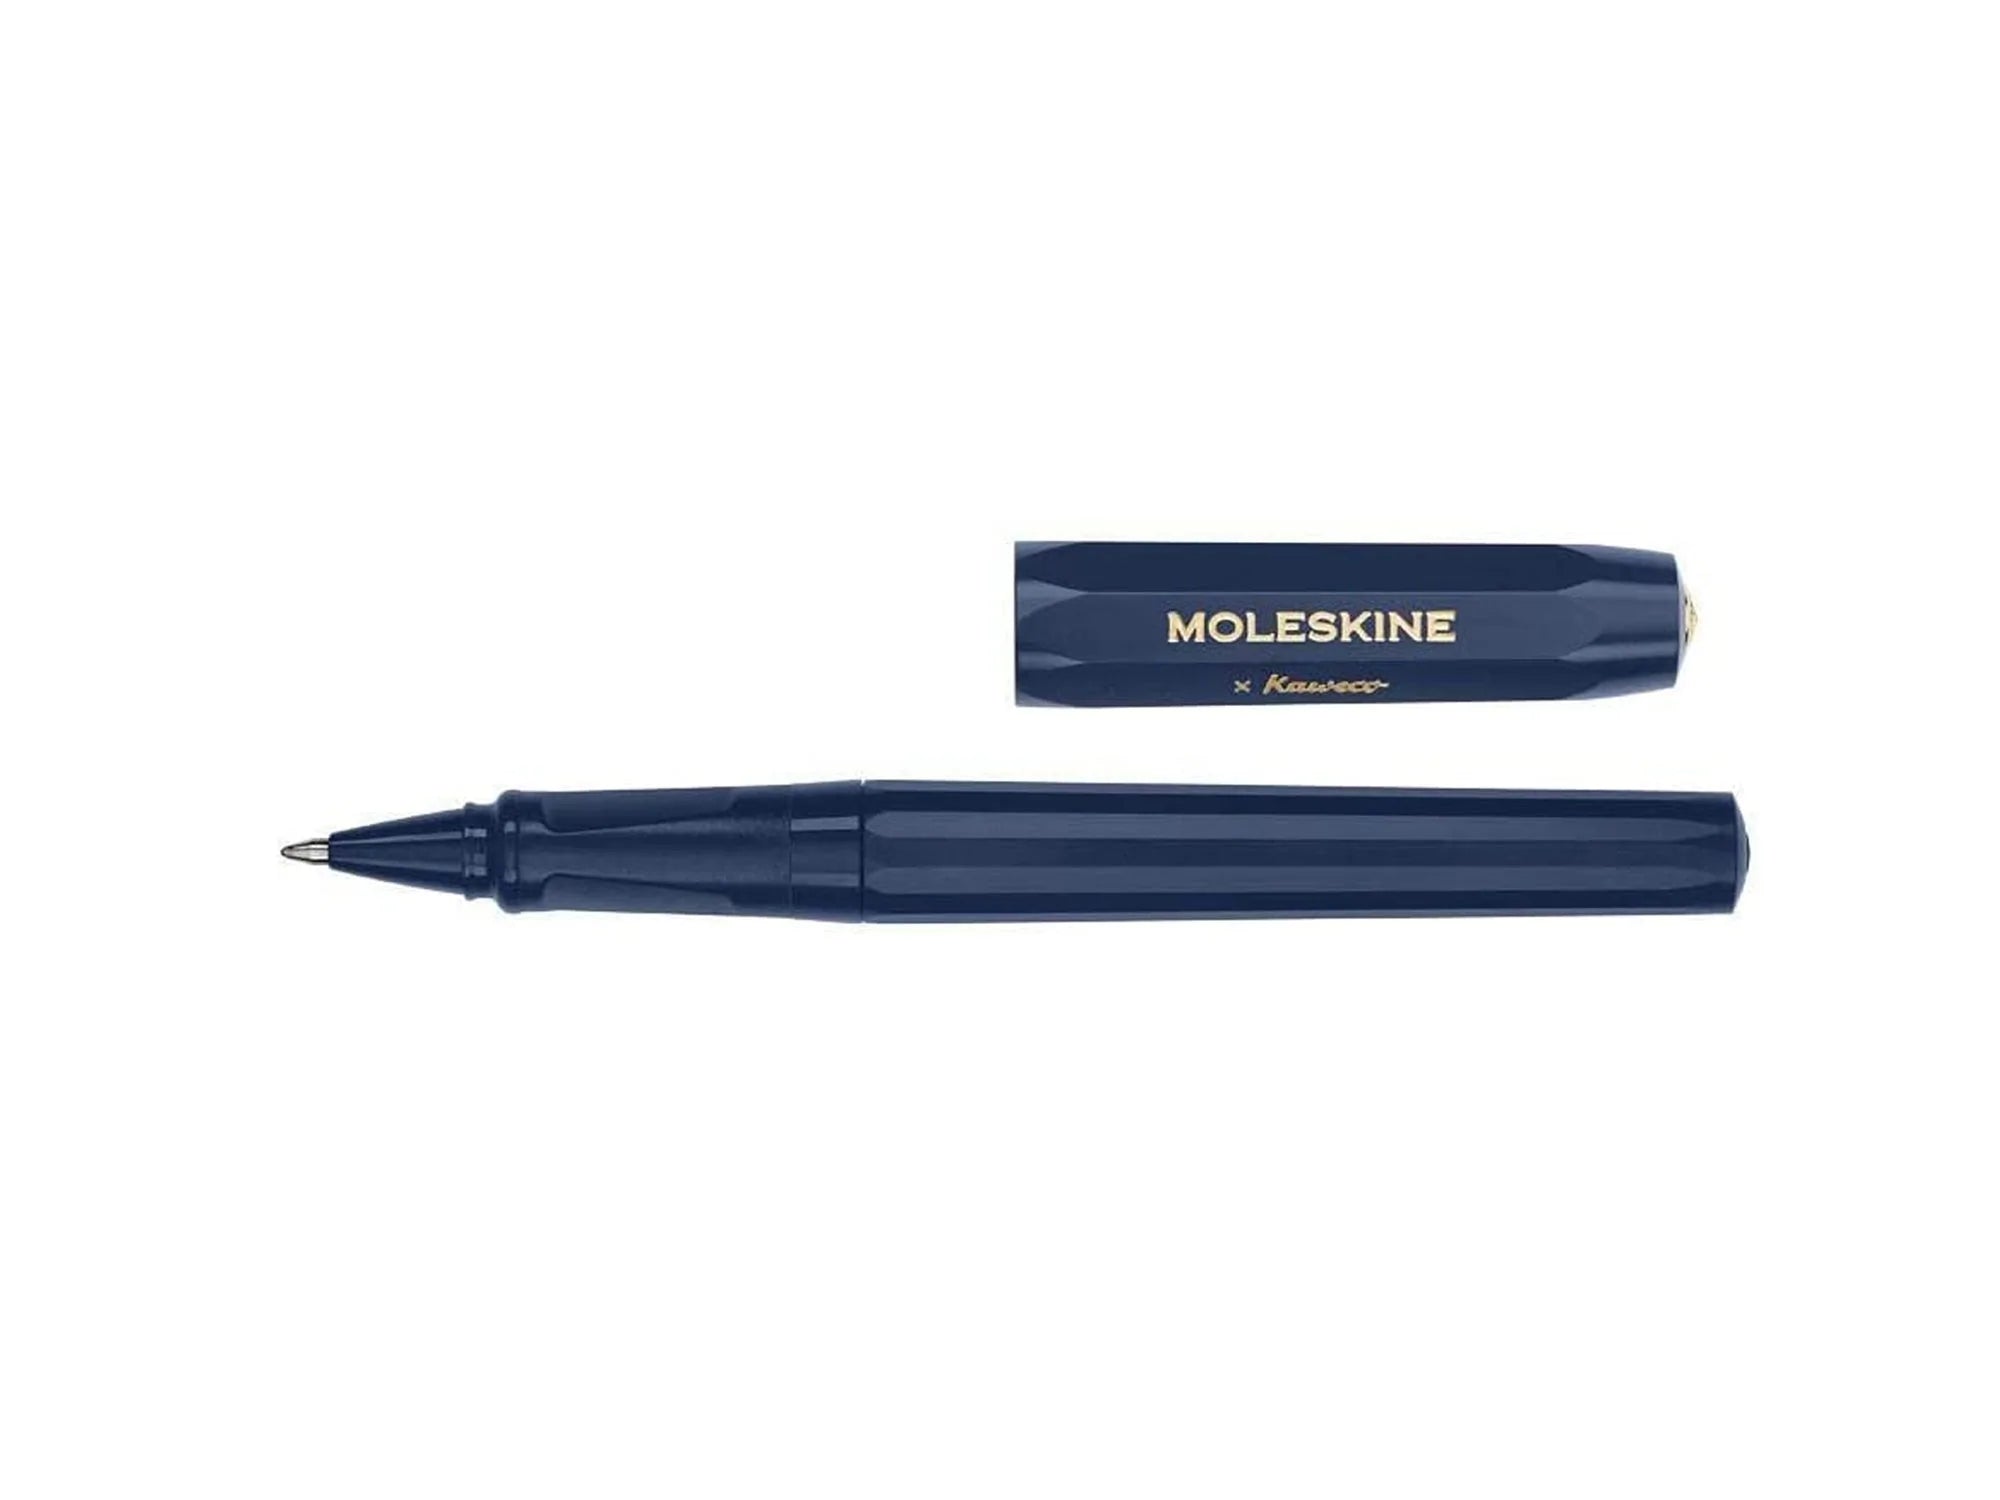 Moleskine Pencil, Moleskine Pens, Ball Pen